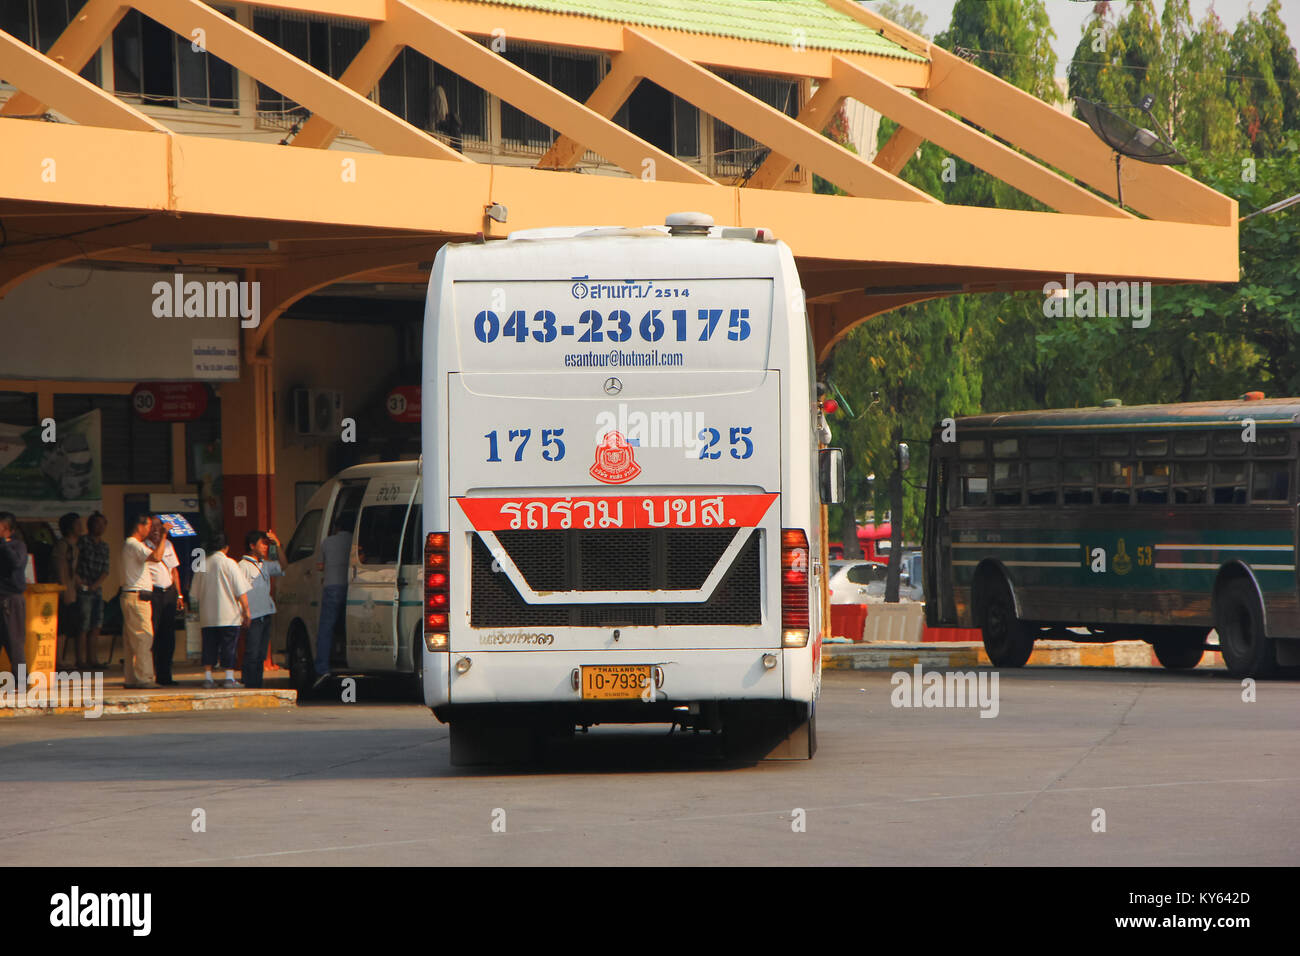 CHIANGMAI, THAILAND - 20. MÄRZ 2013: esarn Tour Company Bus Route Khonkaen und Chiangmai. Foto bei Chiangmai Busbahnhof, Thailand. Stockfoto